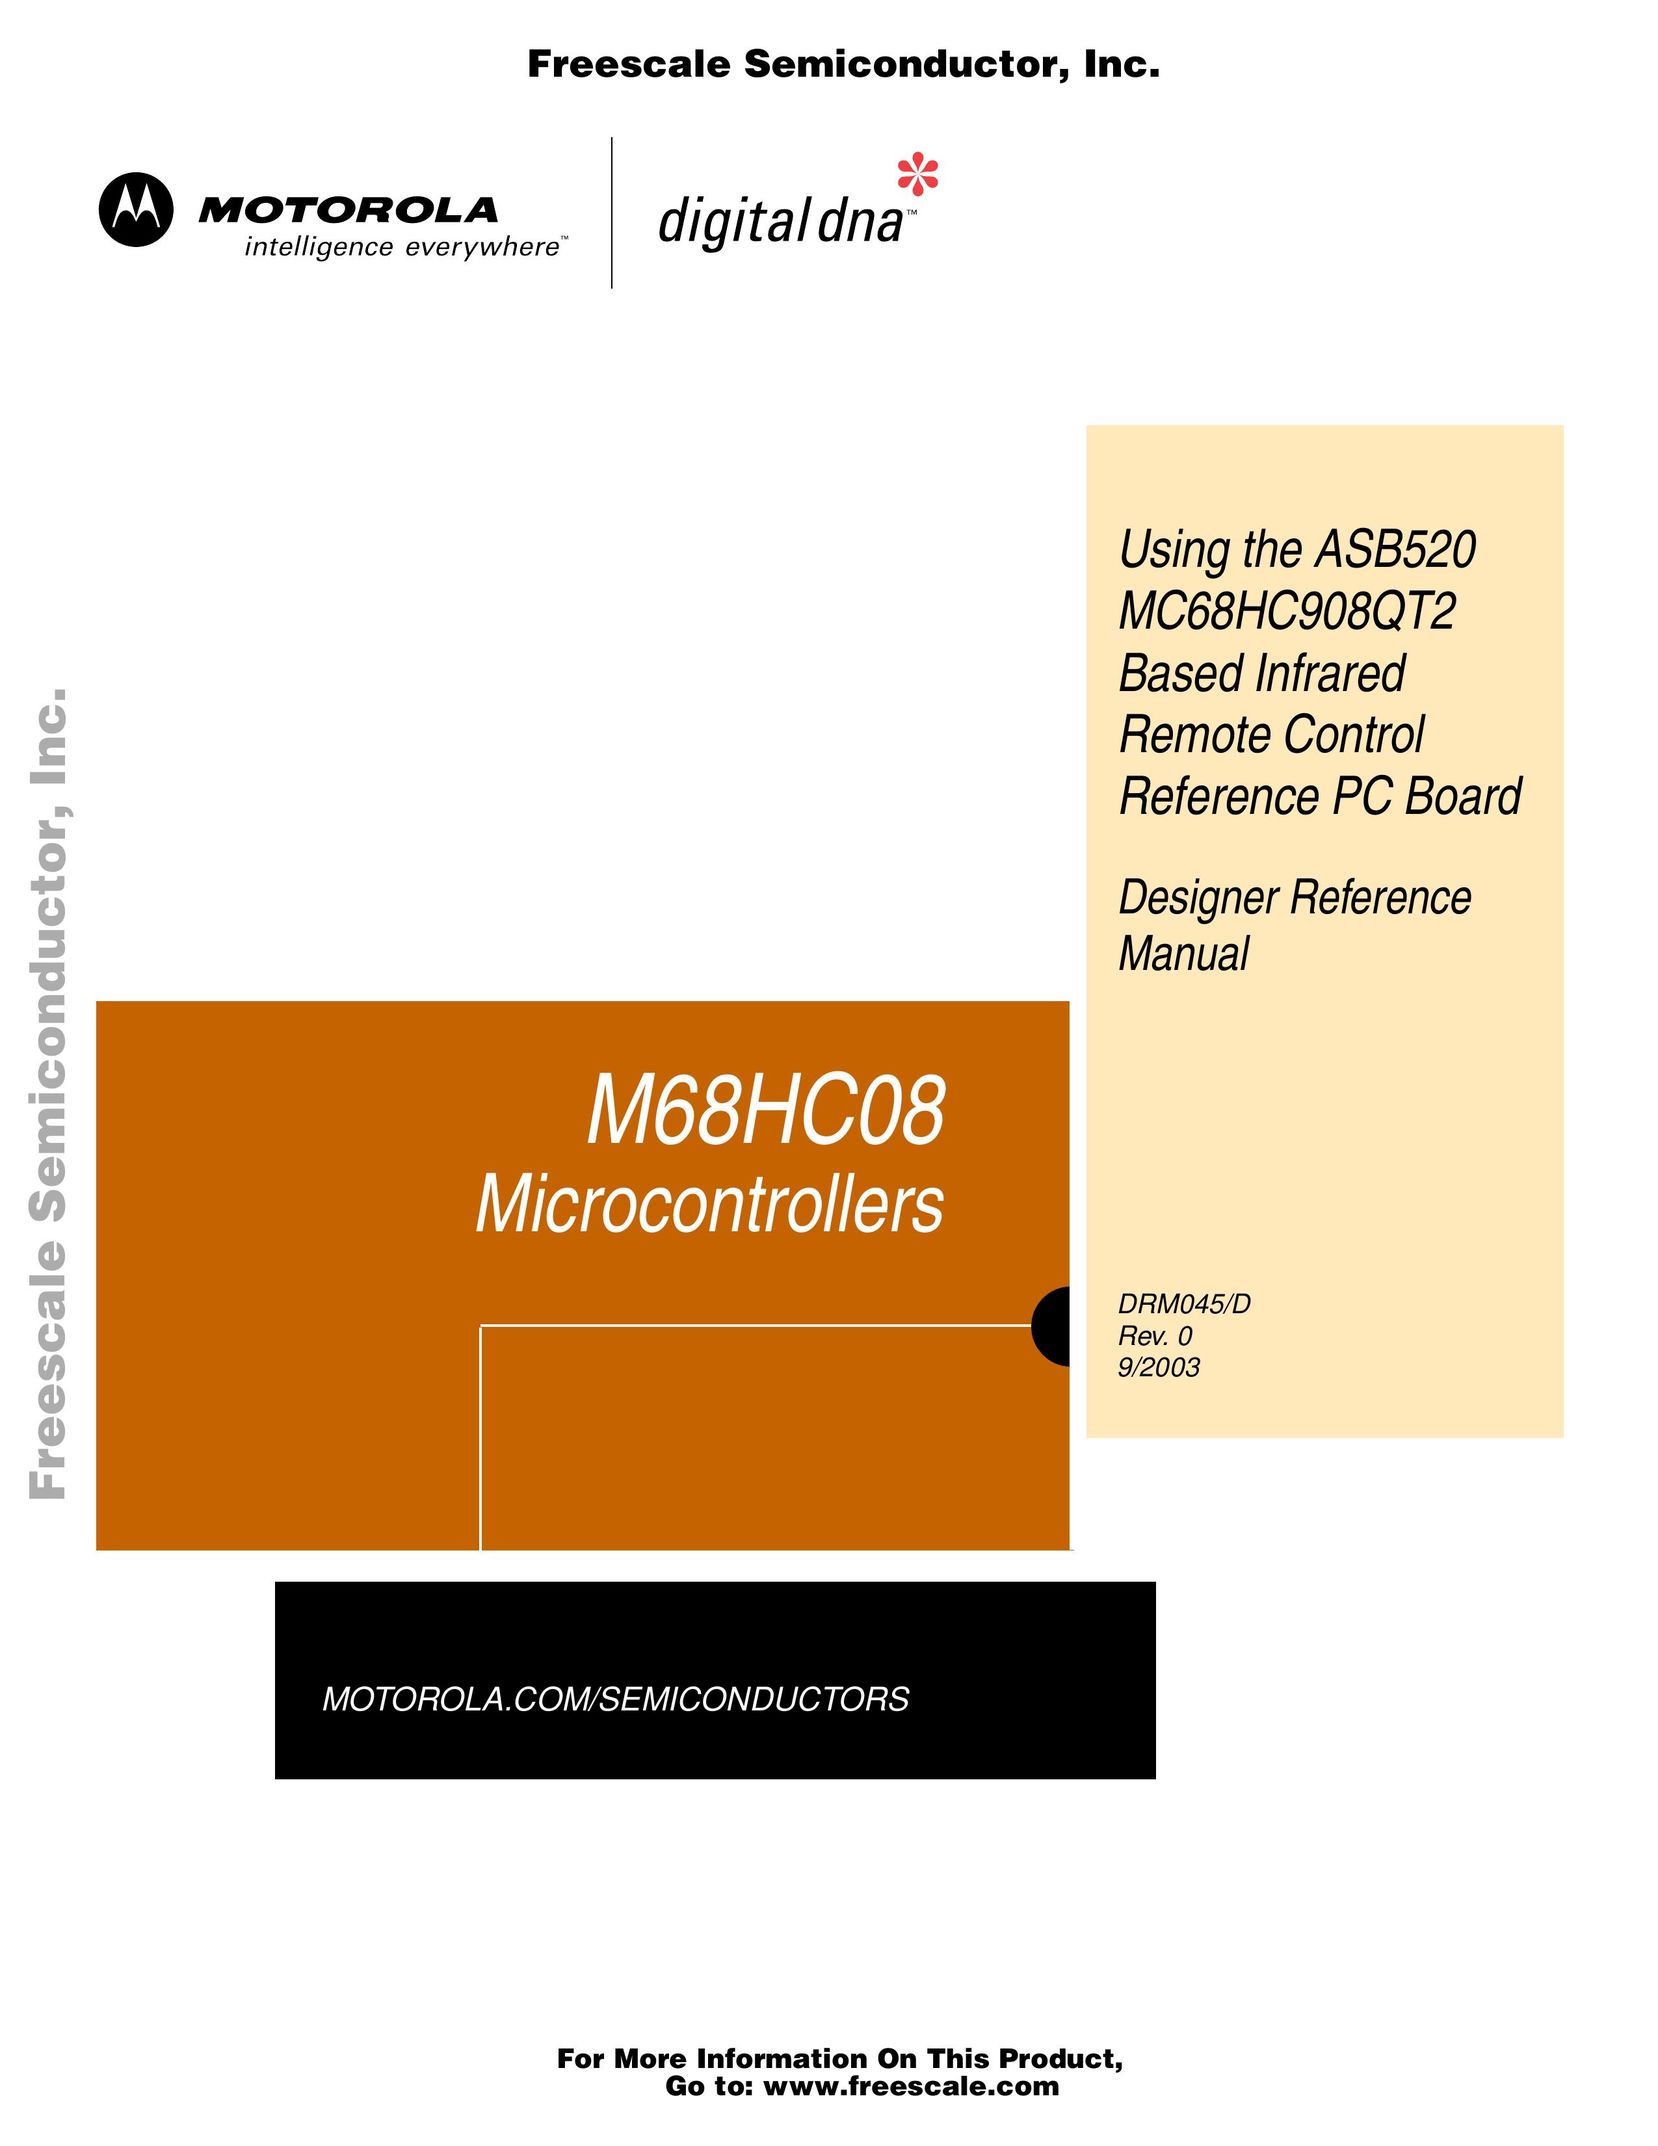 Freescale Semiconductor MC68HC908QT2 Network Card User Manual